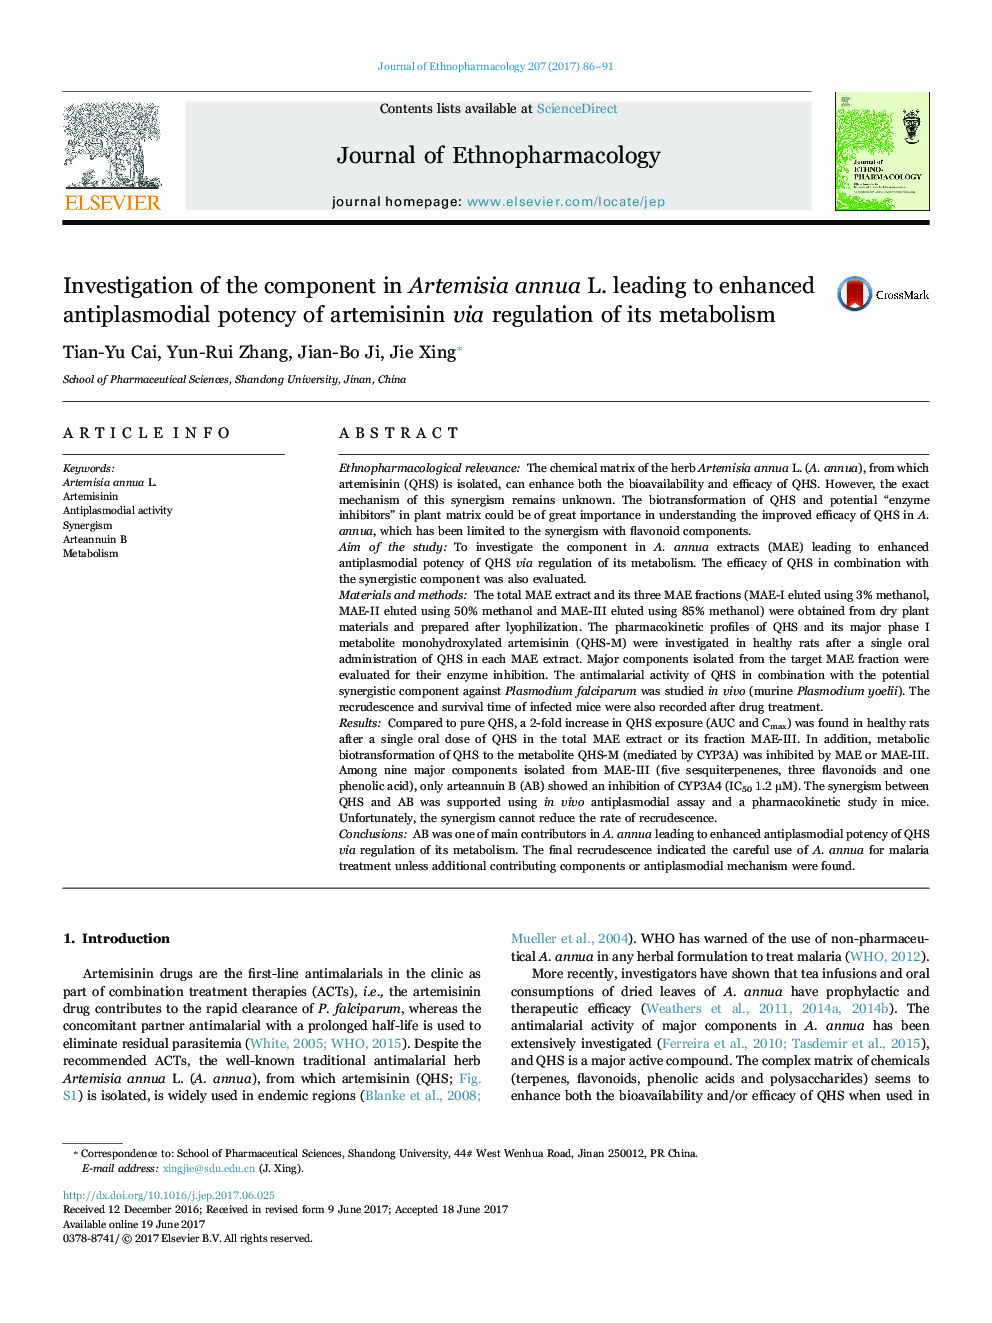 Investigation of the component in Artemisia annua L. leading to enhanced antiplasmodial potency of artemisinin via regulation of its metabolism